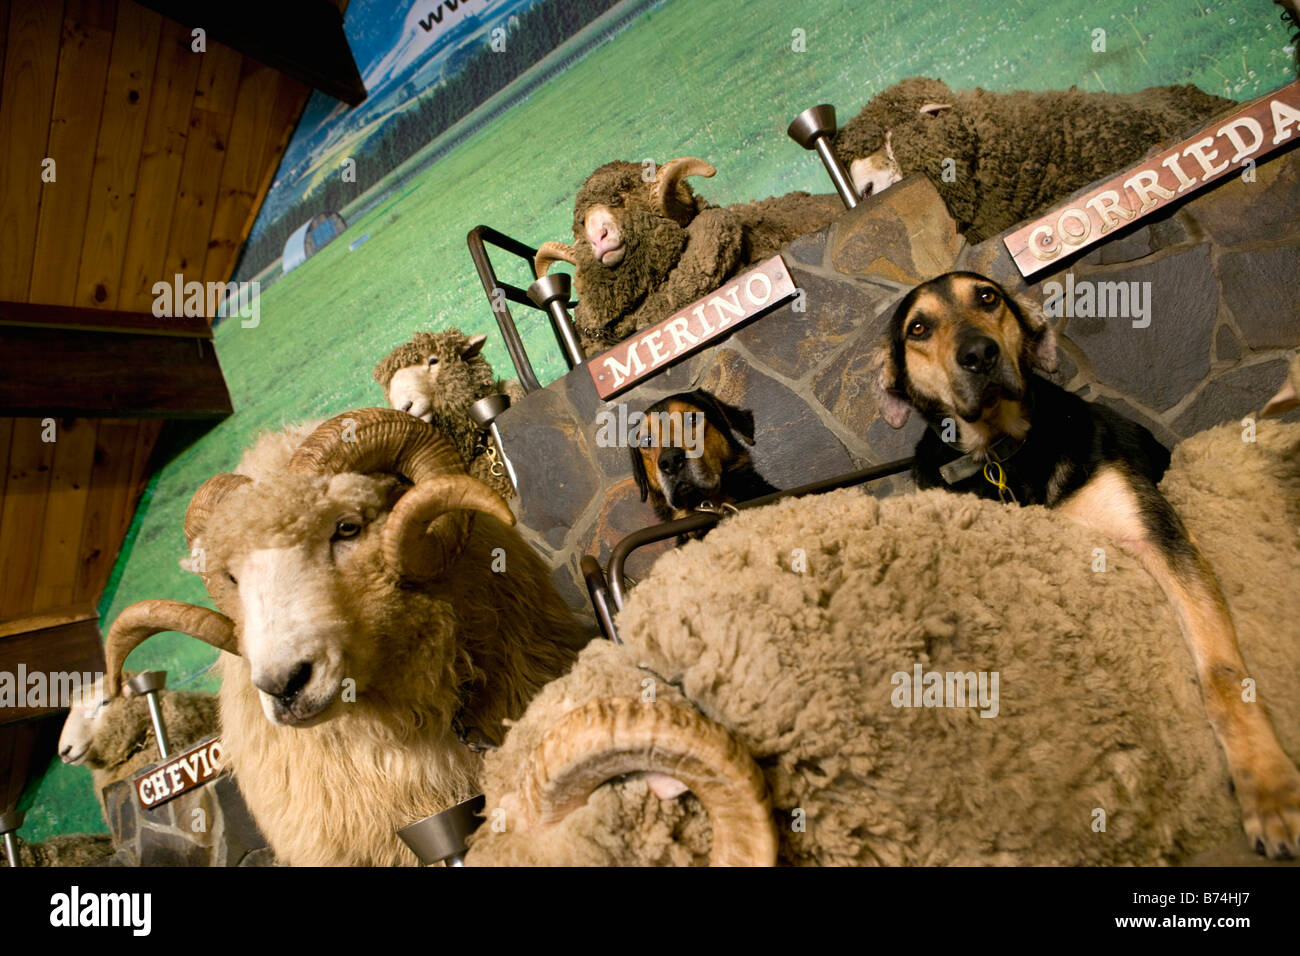 New Zealand, North Island, Rotorua, Sheep show at the Agrodome. Stock Photo